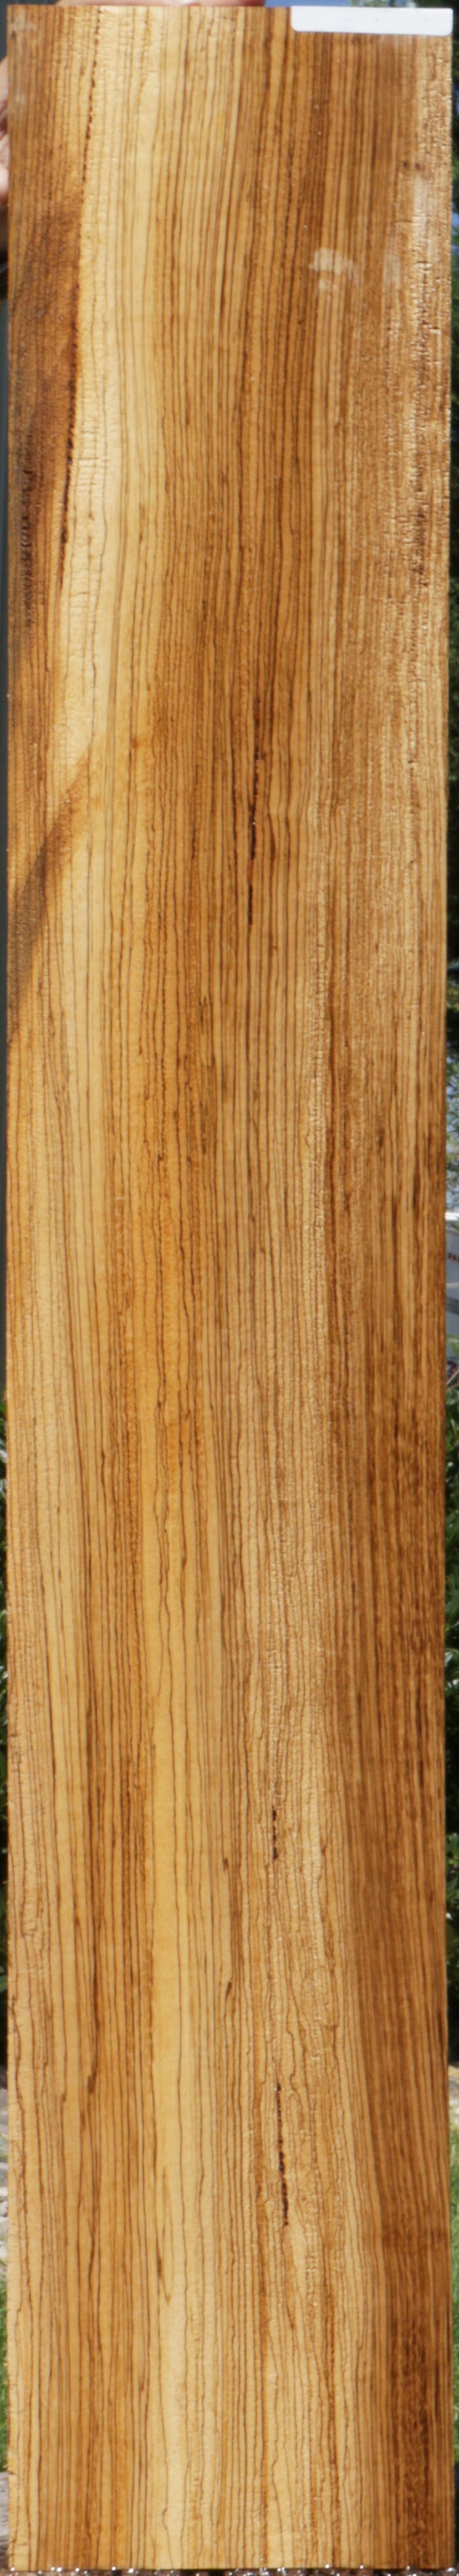 Zebrawood Micro Lumber